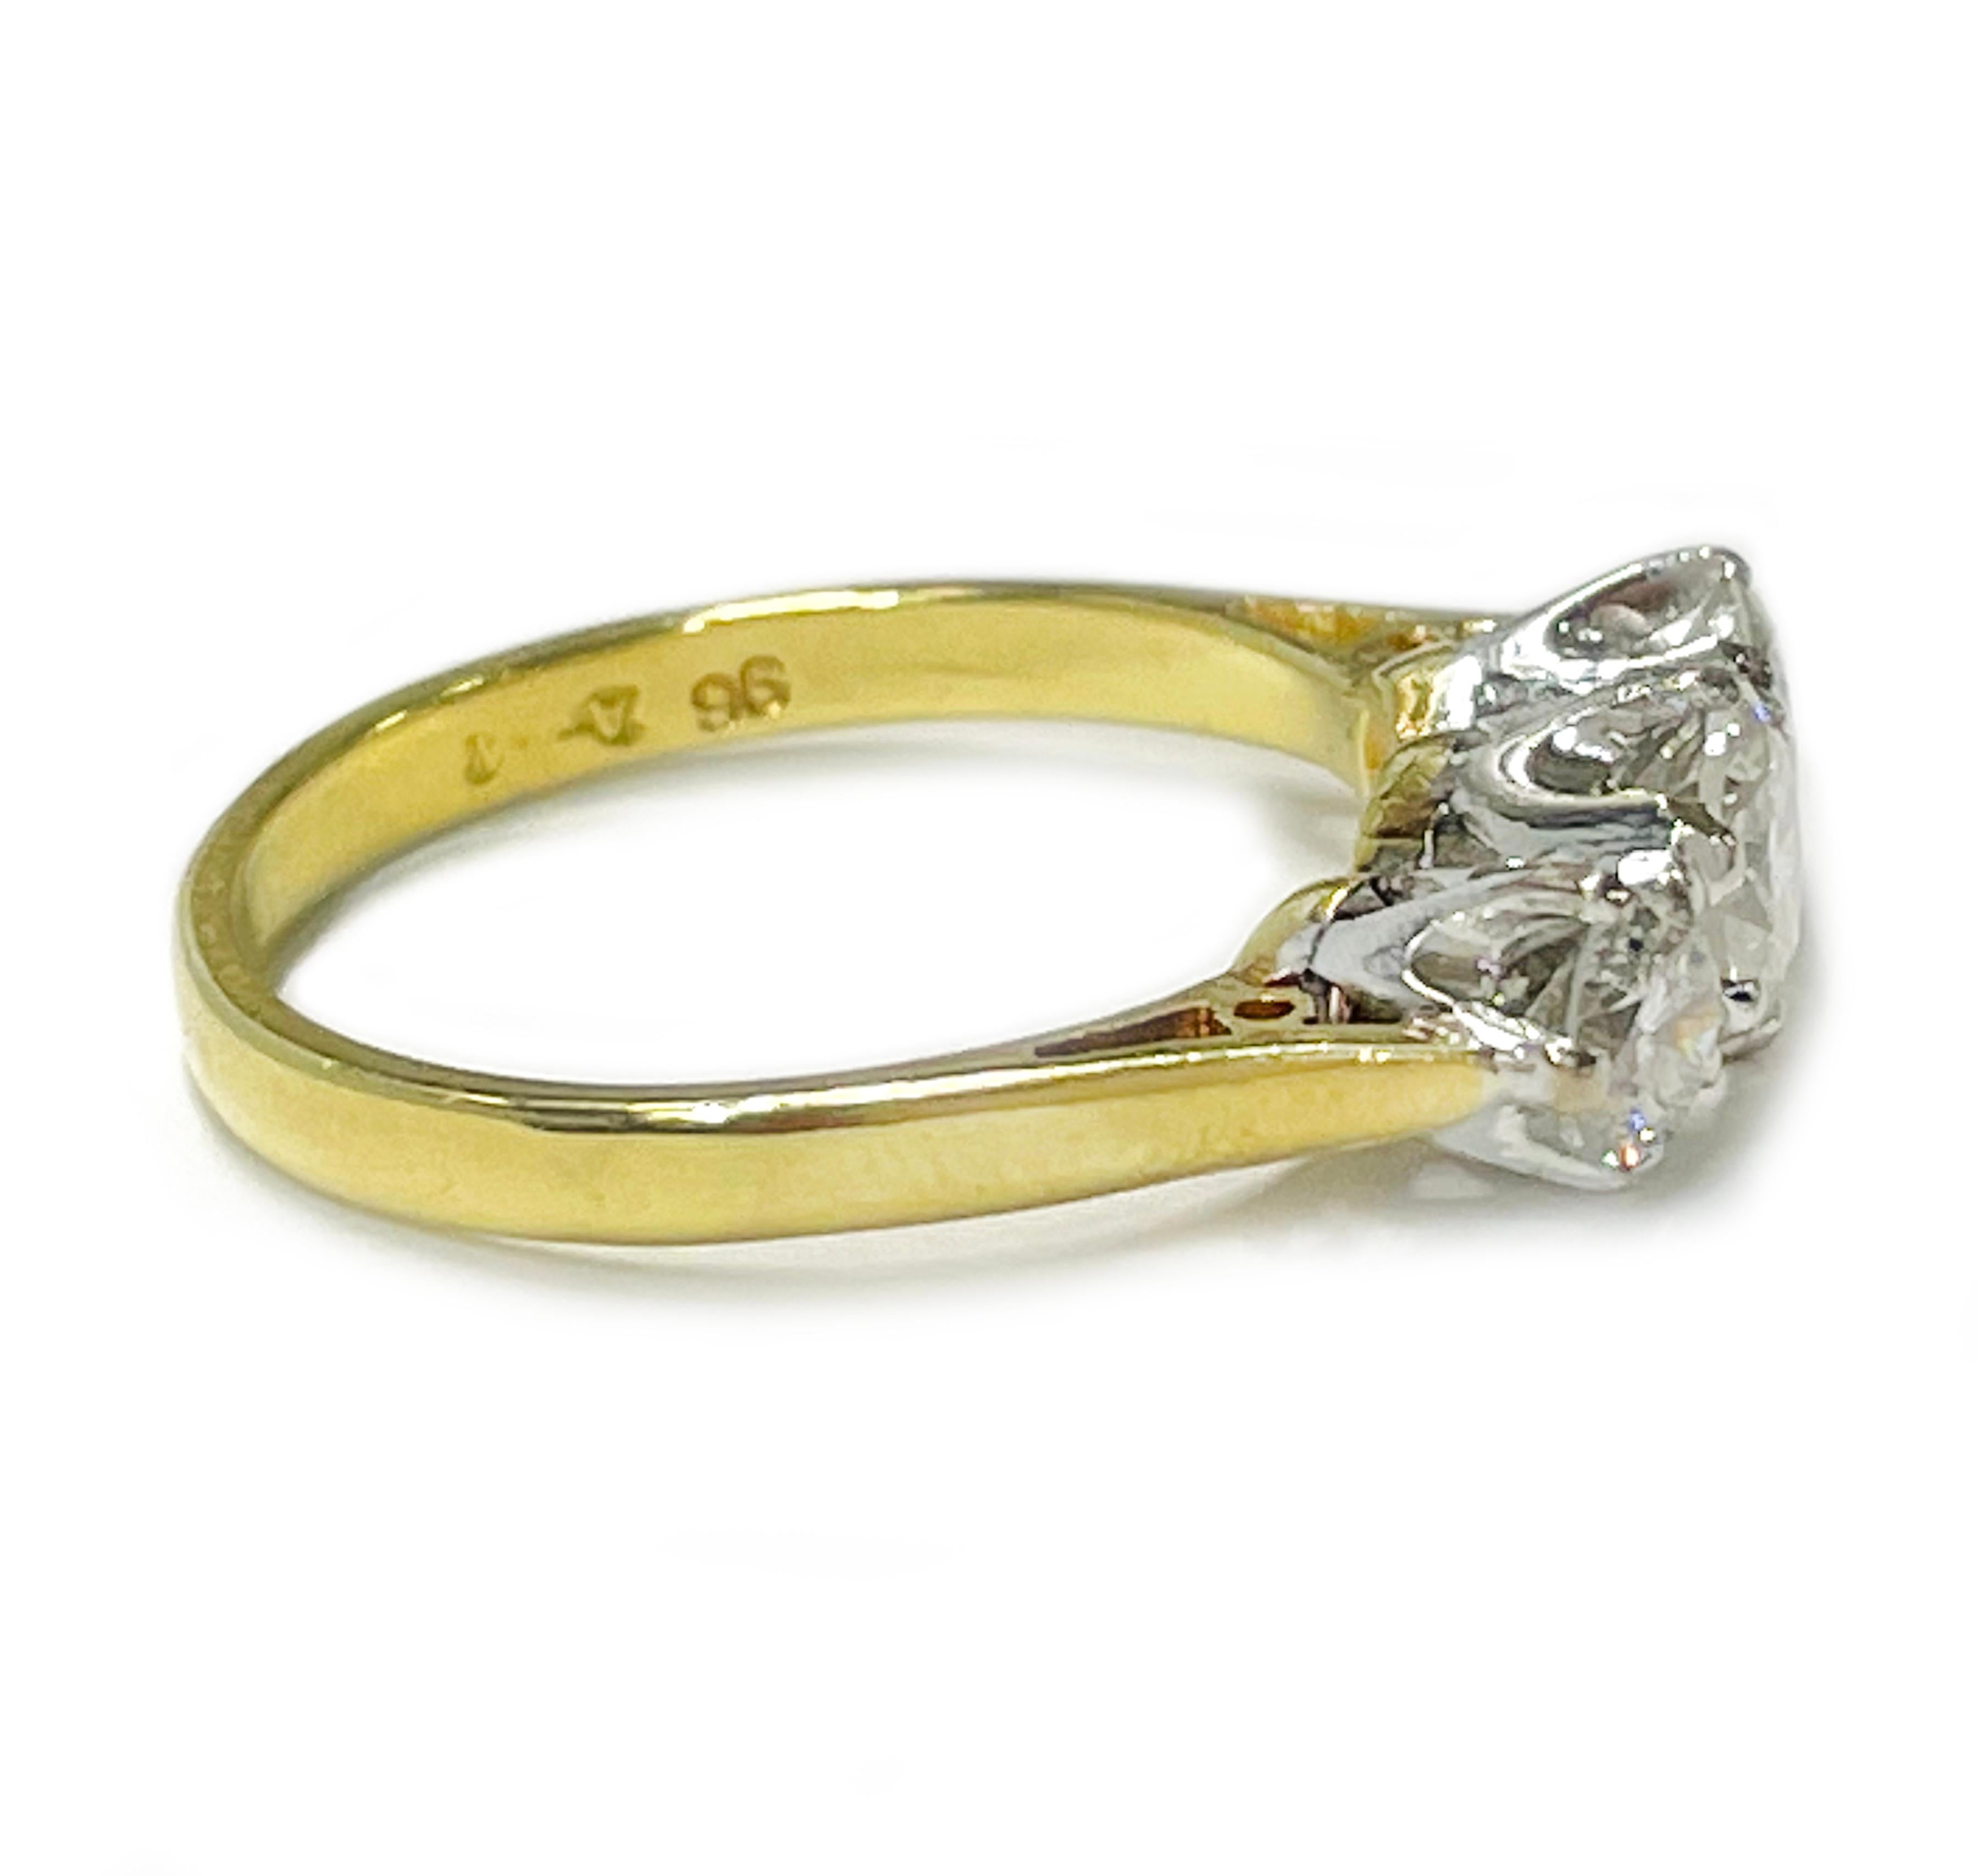 antique diamond rings 1920s